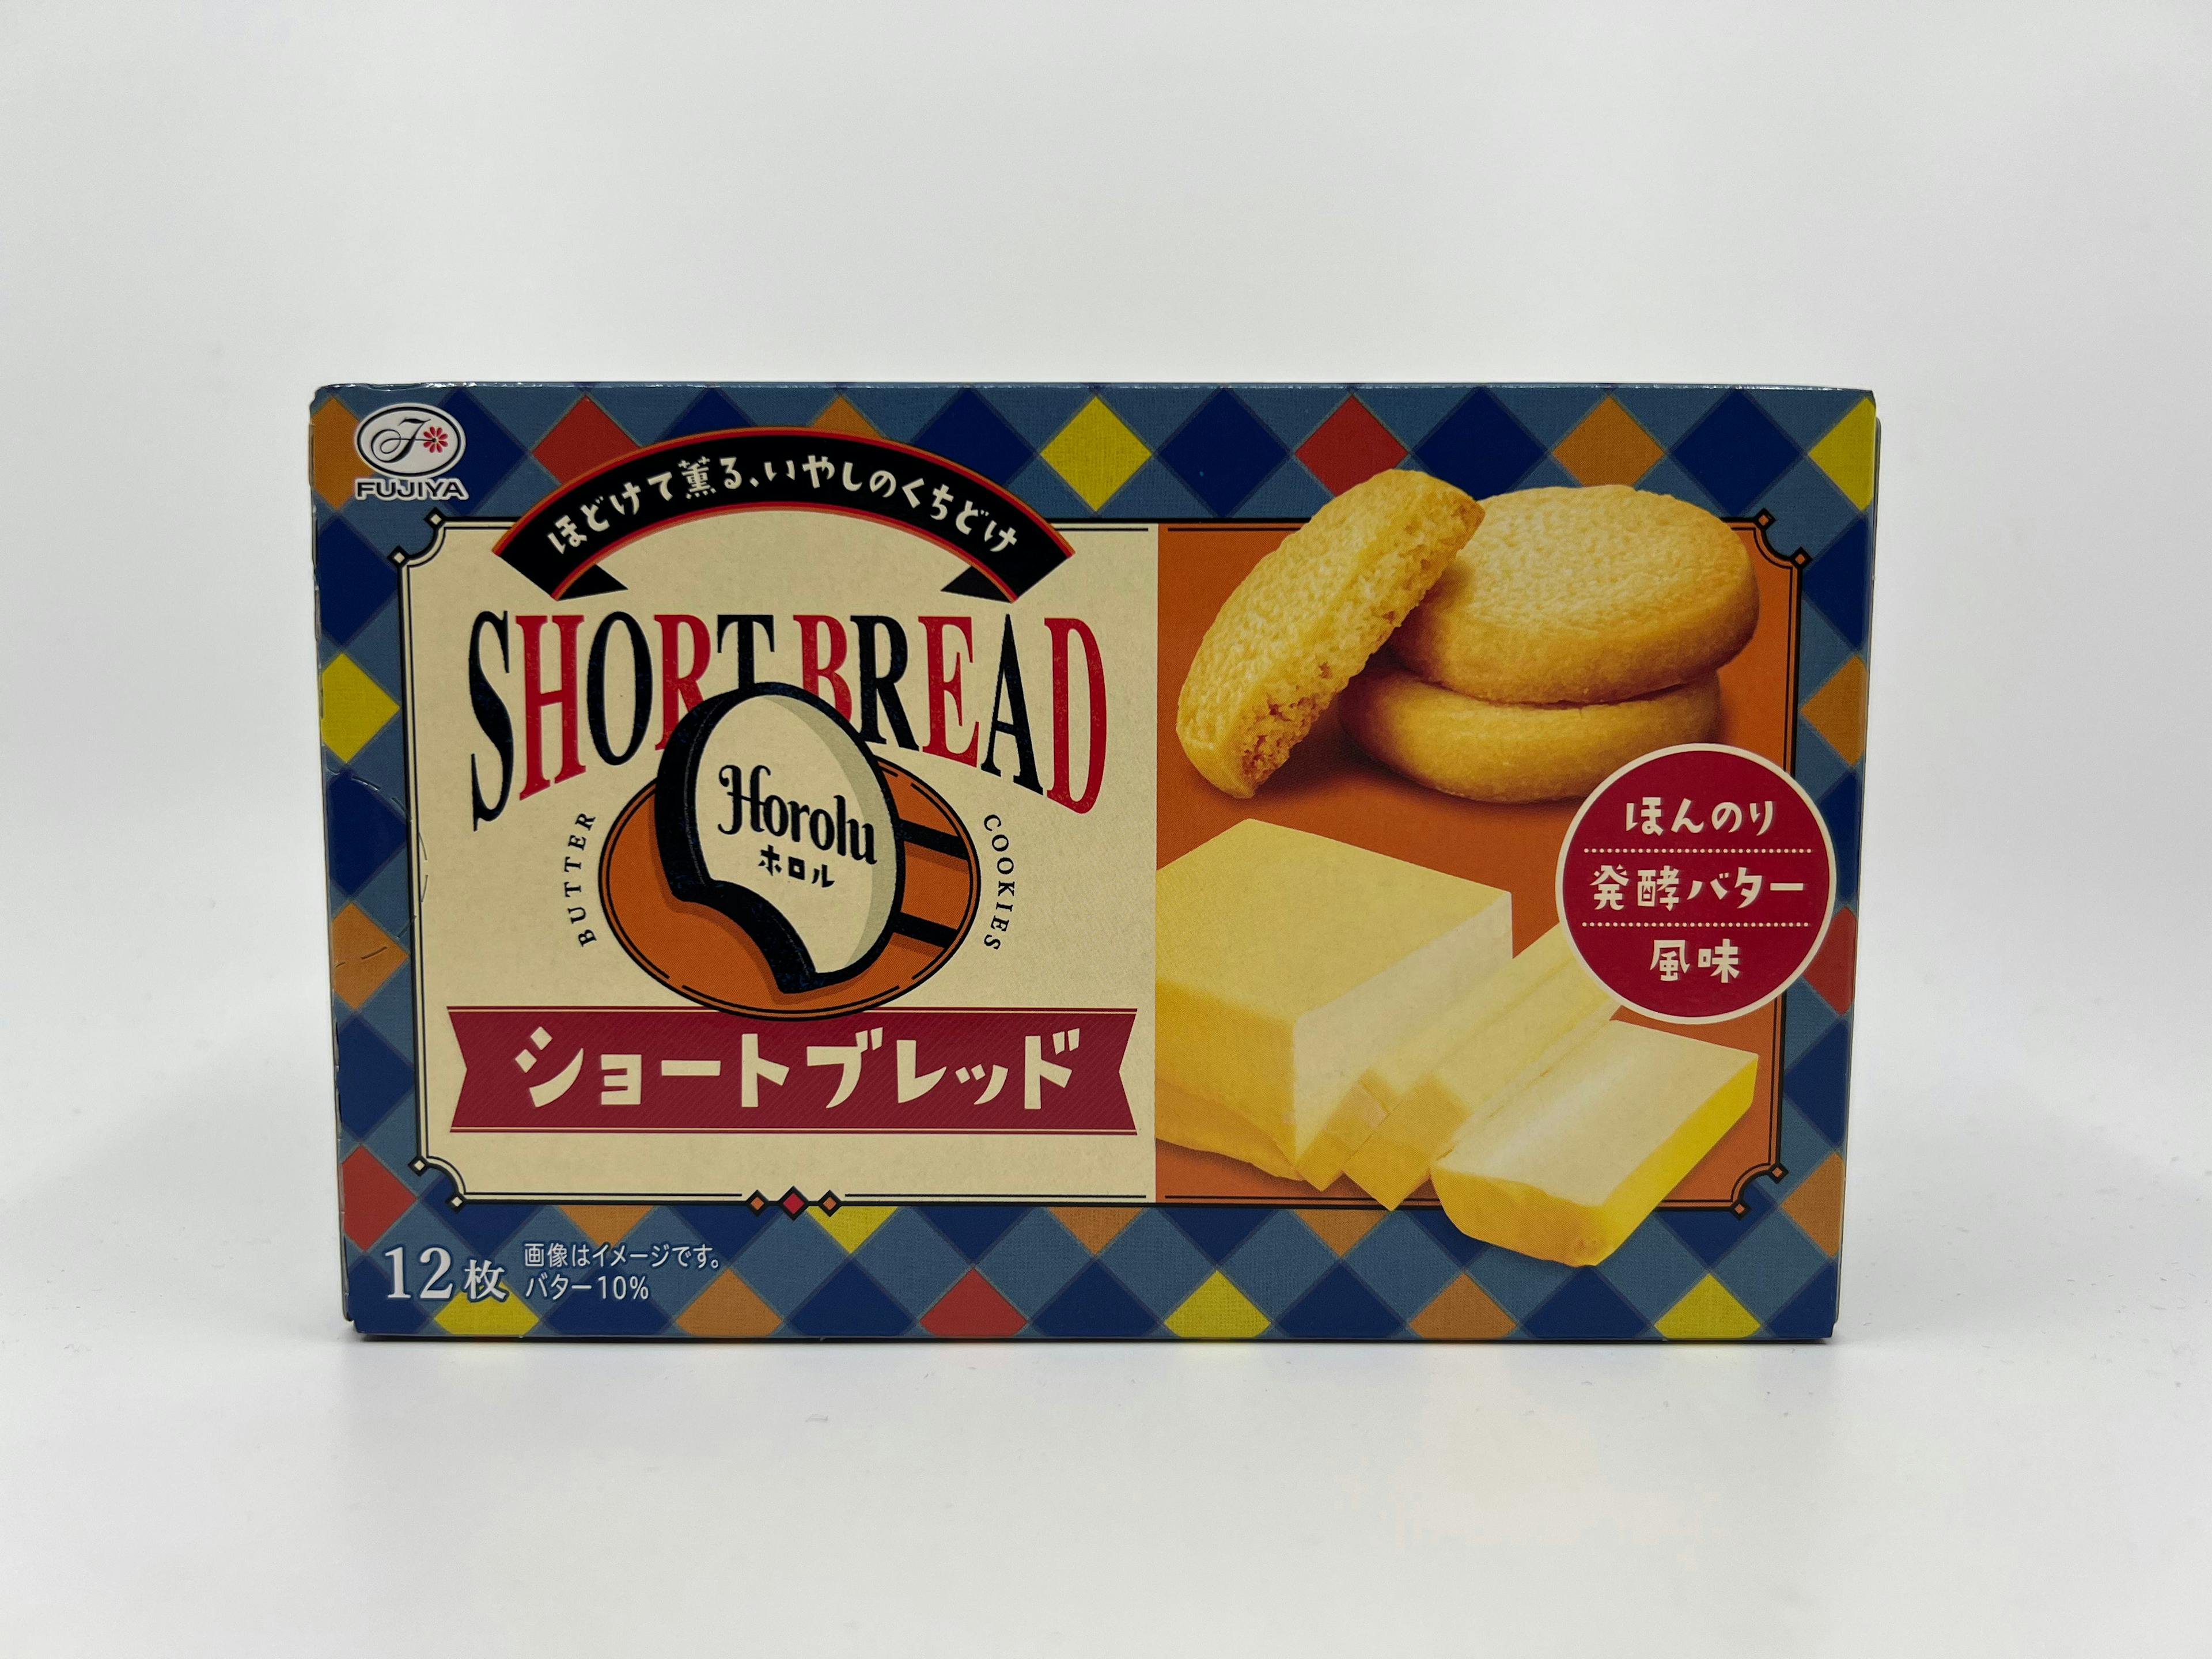 FUJIYA Horolu Shortbread cookie, Scorched butter flavored